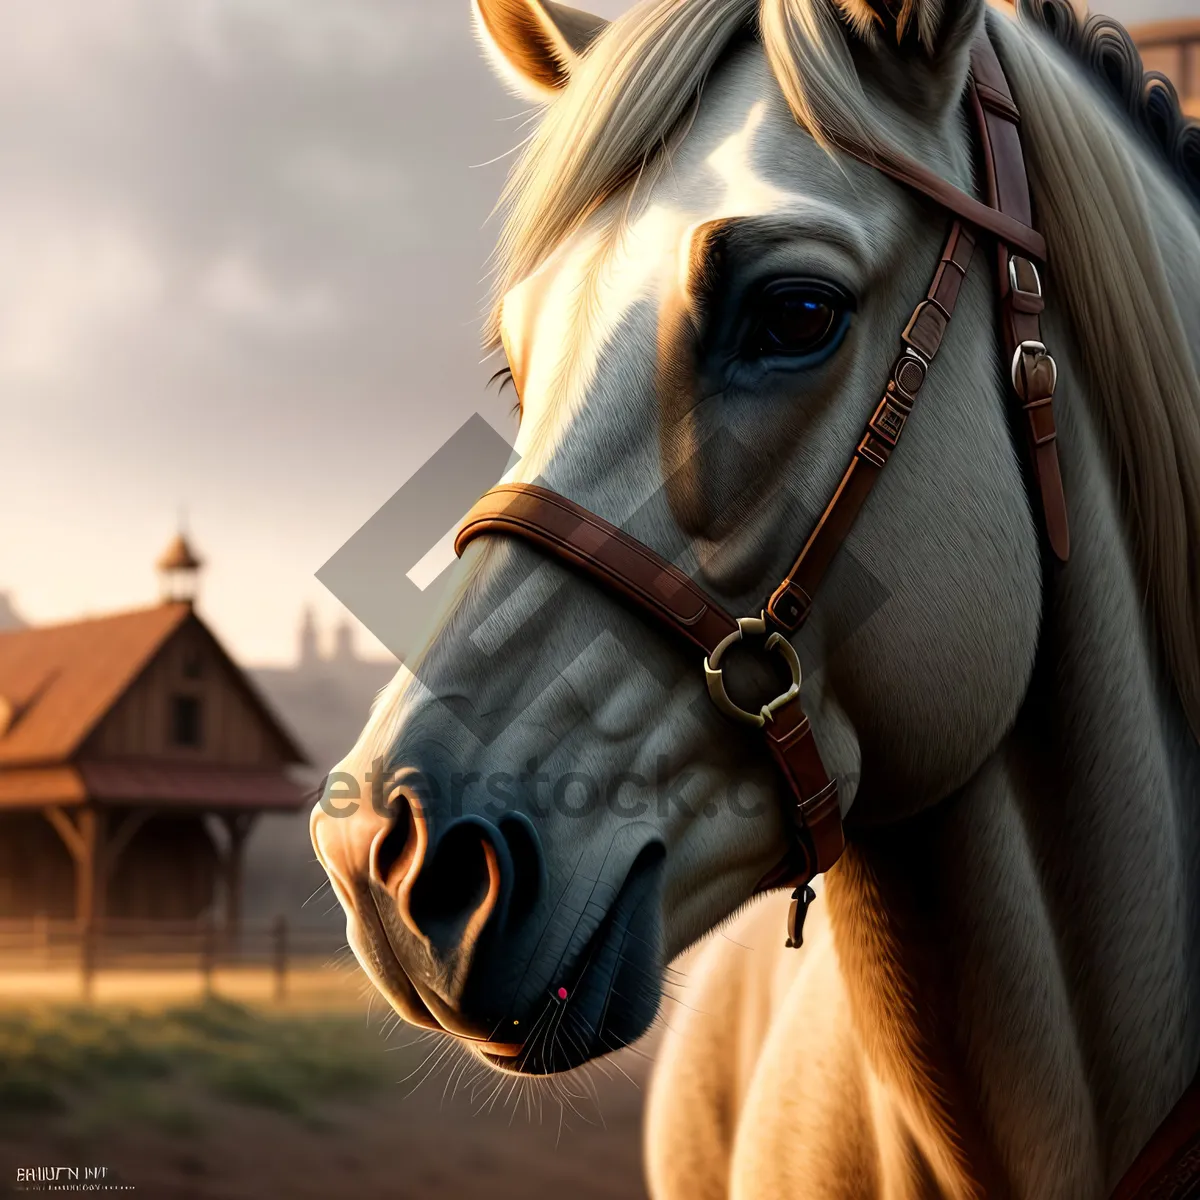 Picture of Stallion Head in Brown Bridle - Majestic Equestrian Portrait.